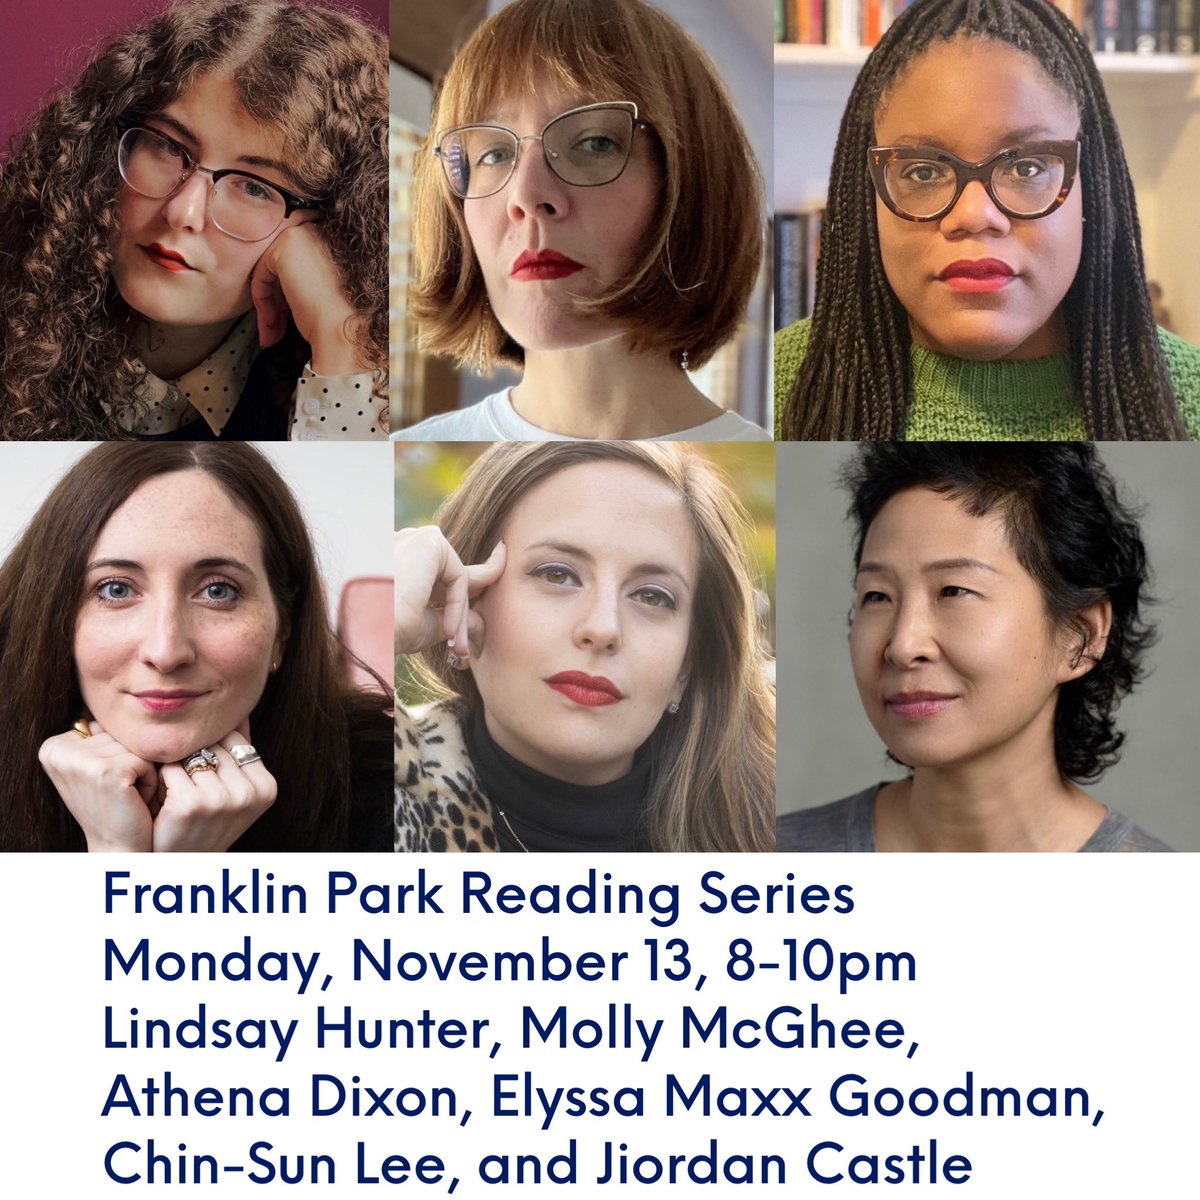 MONDAY, 8PM: Join us at the @FranklinParkBK Reading Series for Powerhouse Women Night, featuring Lindsay Hunter, @mollymcghee, @AthenaDDixon, @MissManhattanNY, @leechinsun, and @jiordancastle! Drink specials, book raffle! fb.me/e/5Ra9ozMJU #Free #crownheights